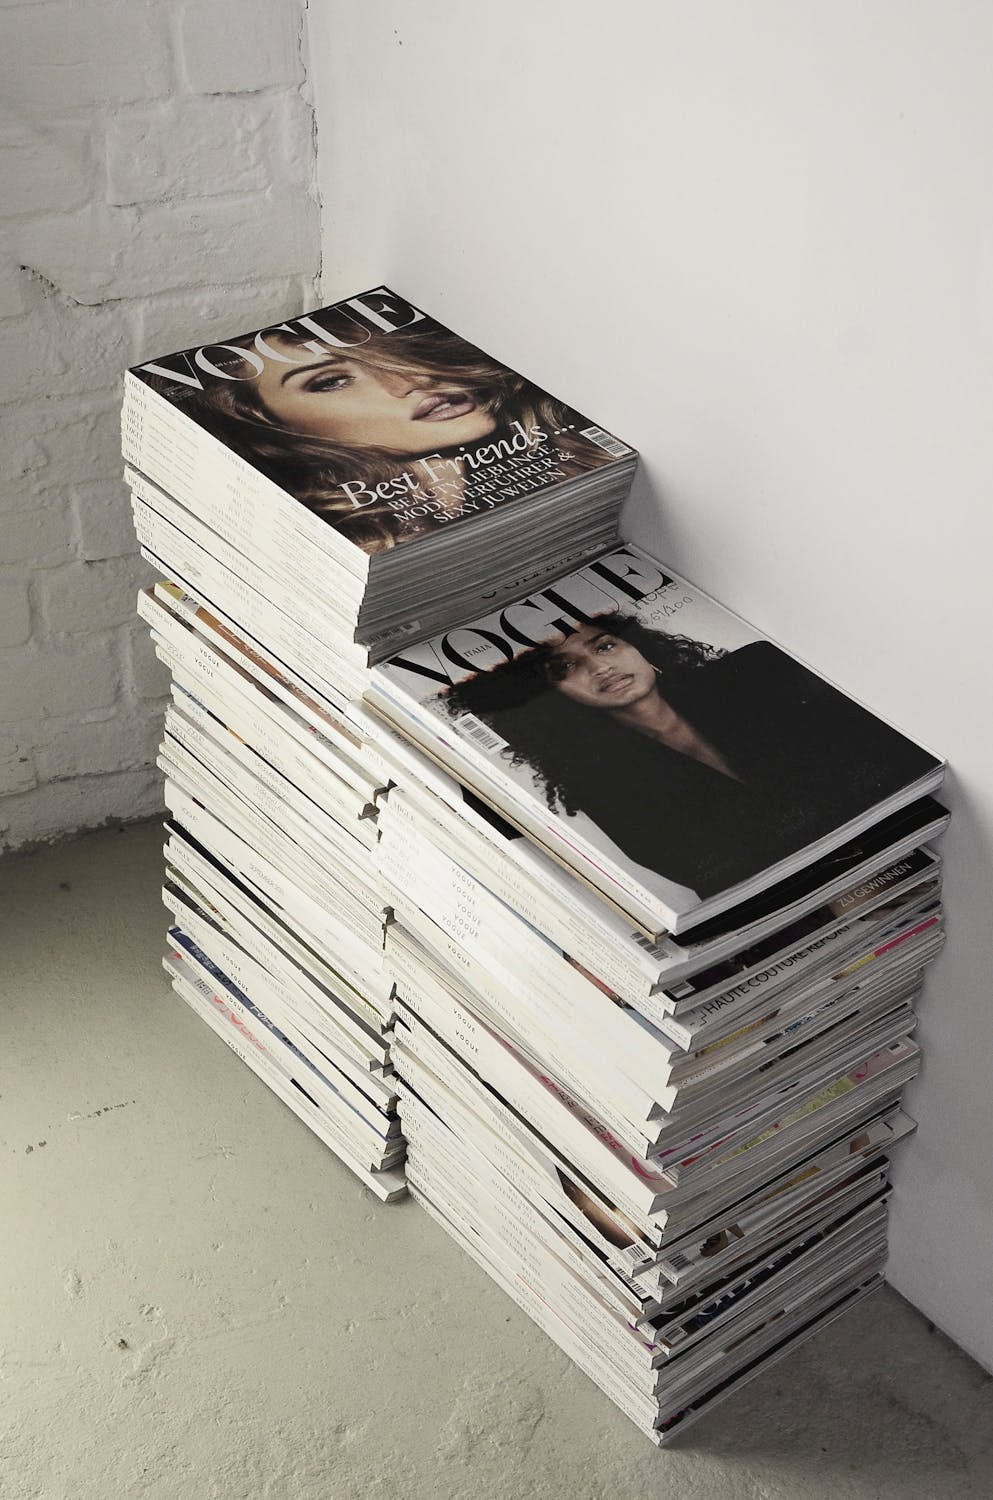 Stacks of Vogue magazines